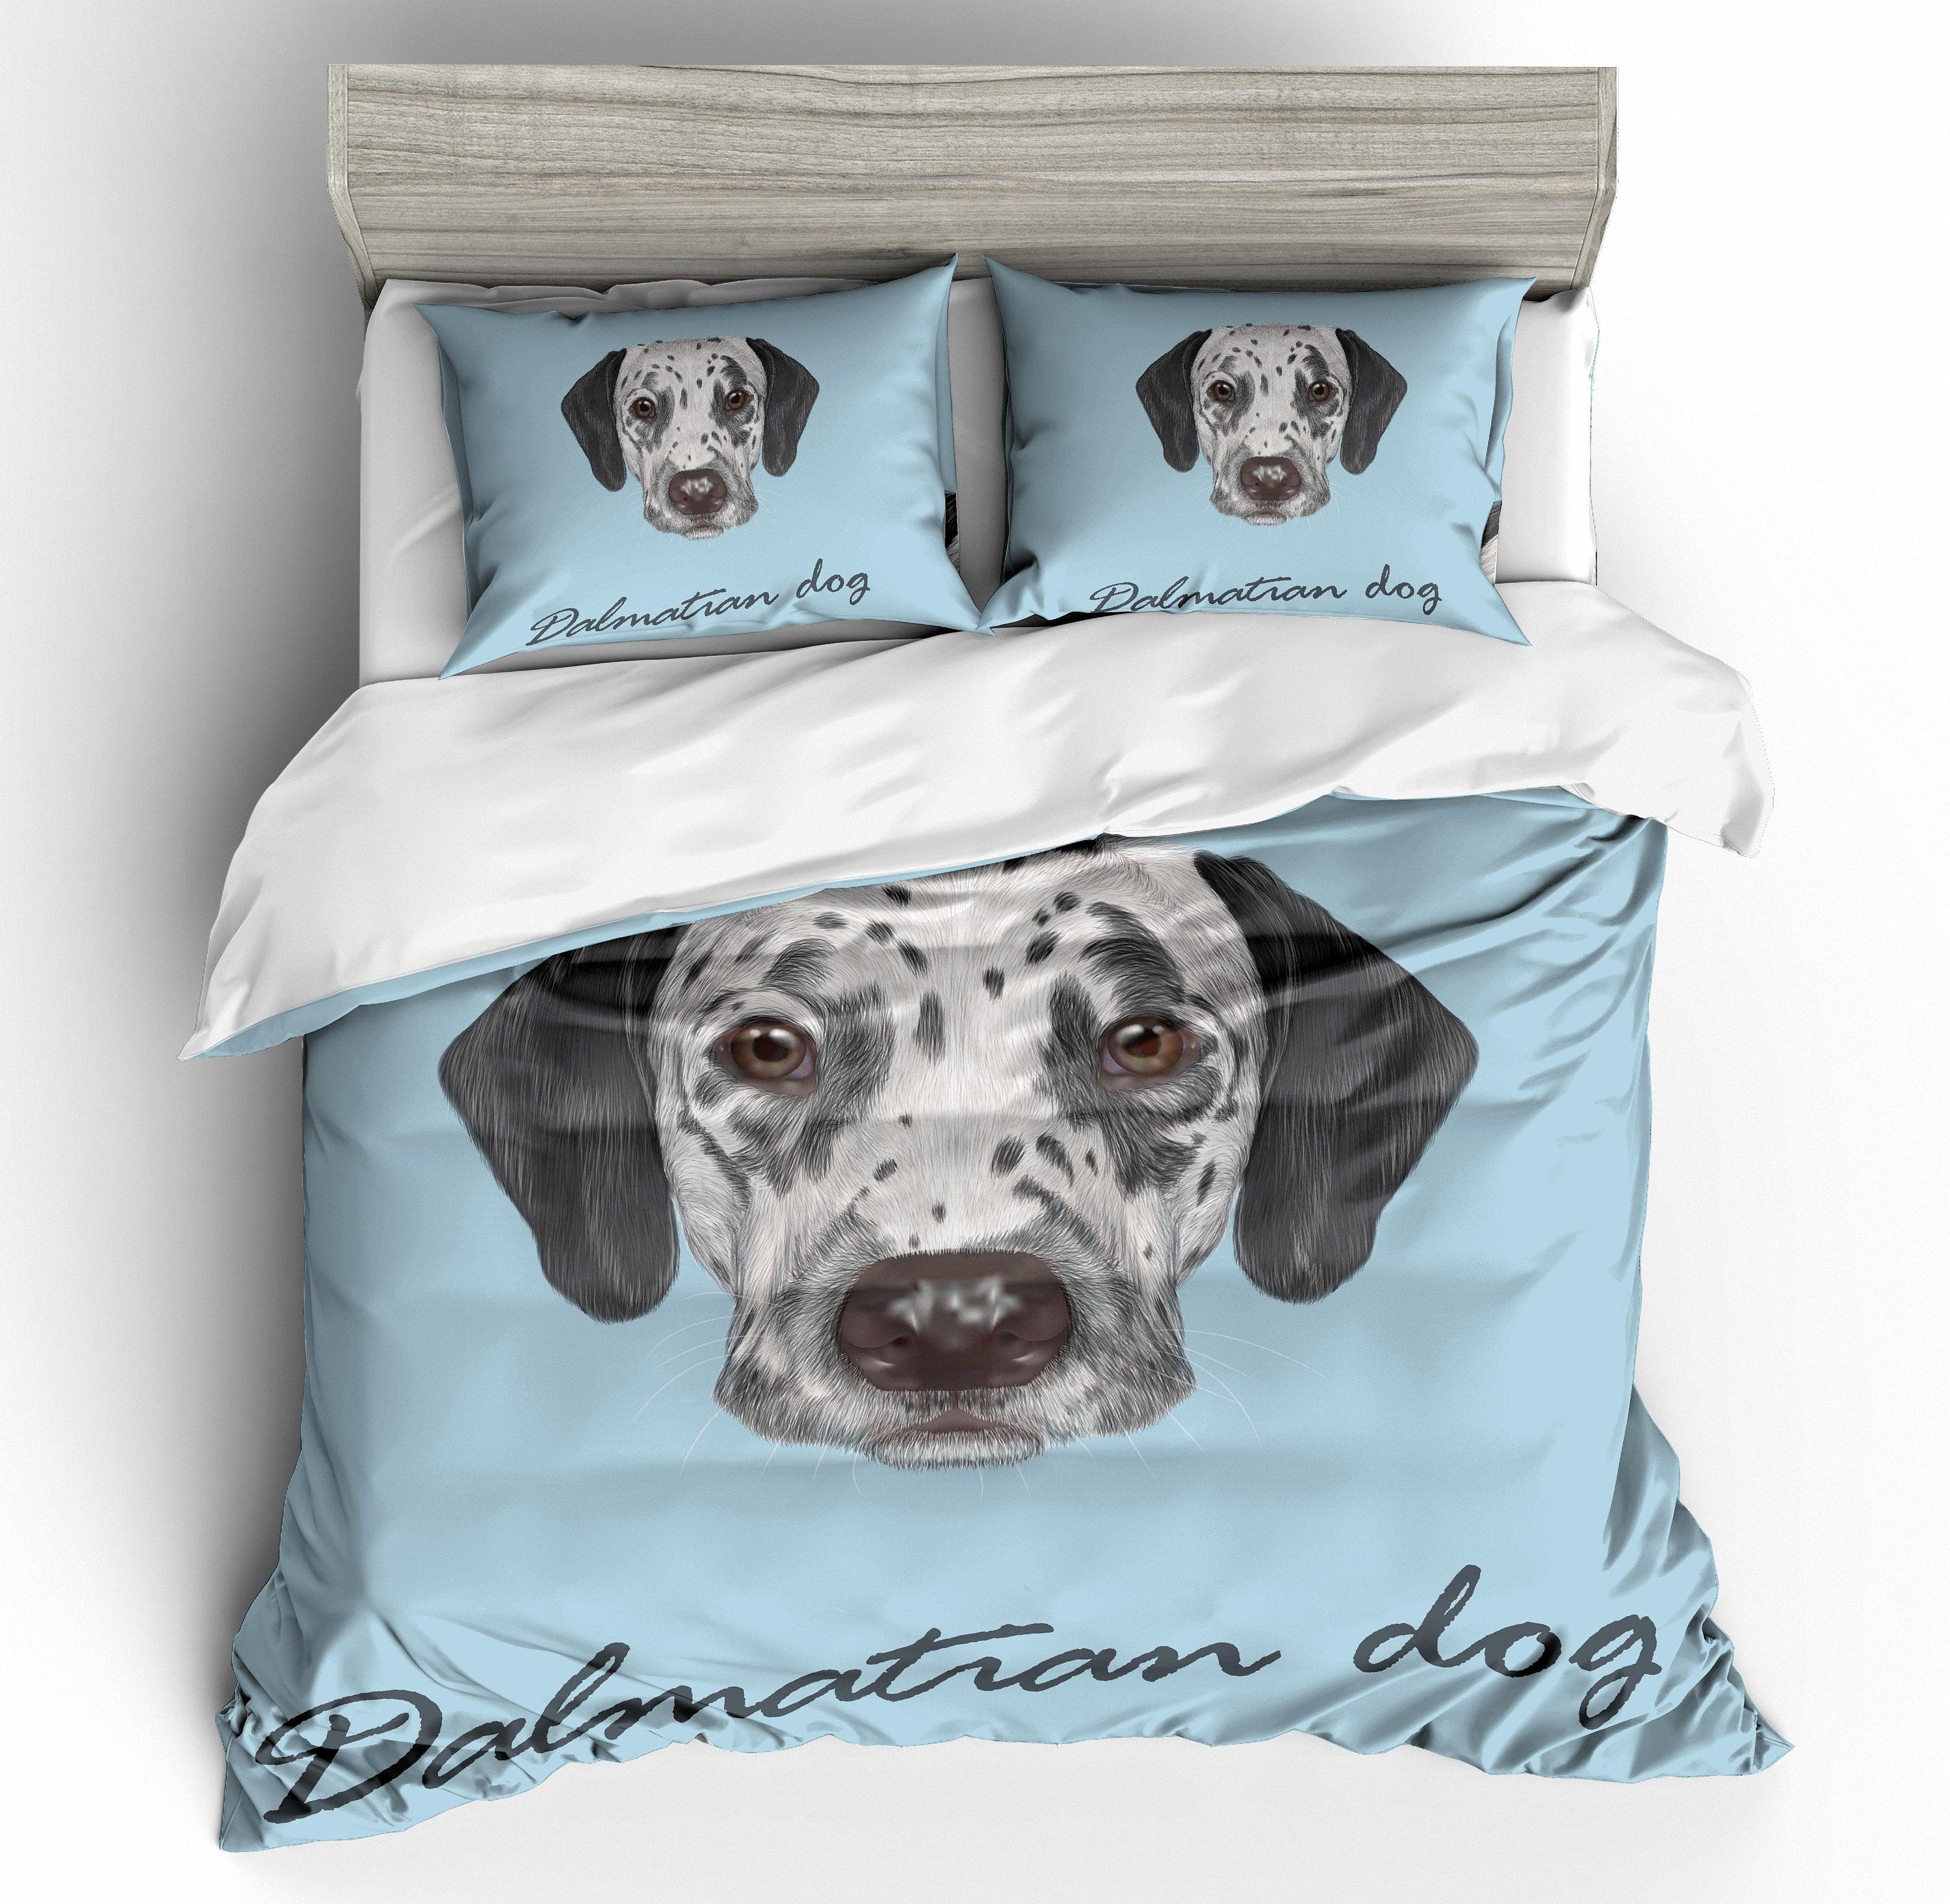 3D Dalmatian Bedding Set Quilt Cover Quilt Duvet Cover Pillowcases Personalized  Bedding Queen  King  Full  Double 3 Pcs- Jess Art Decoration